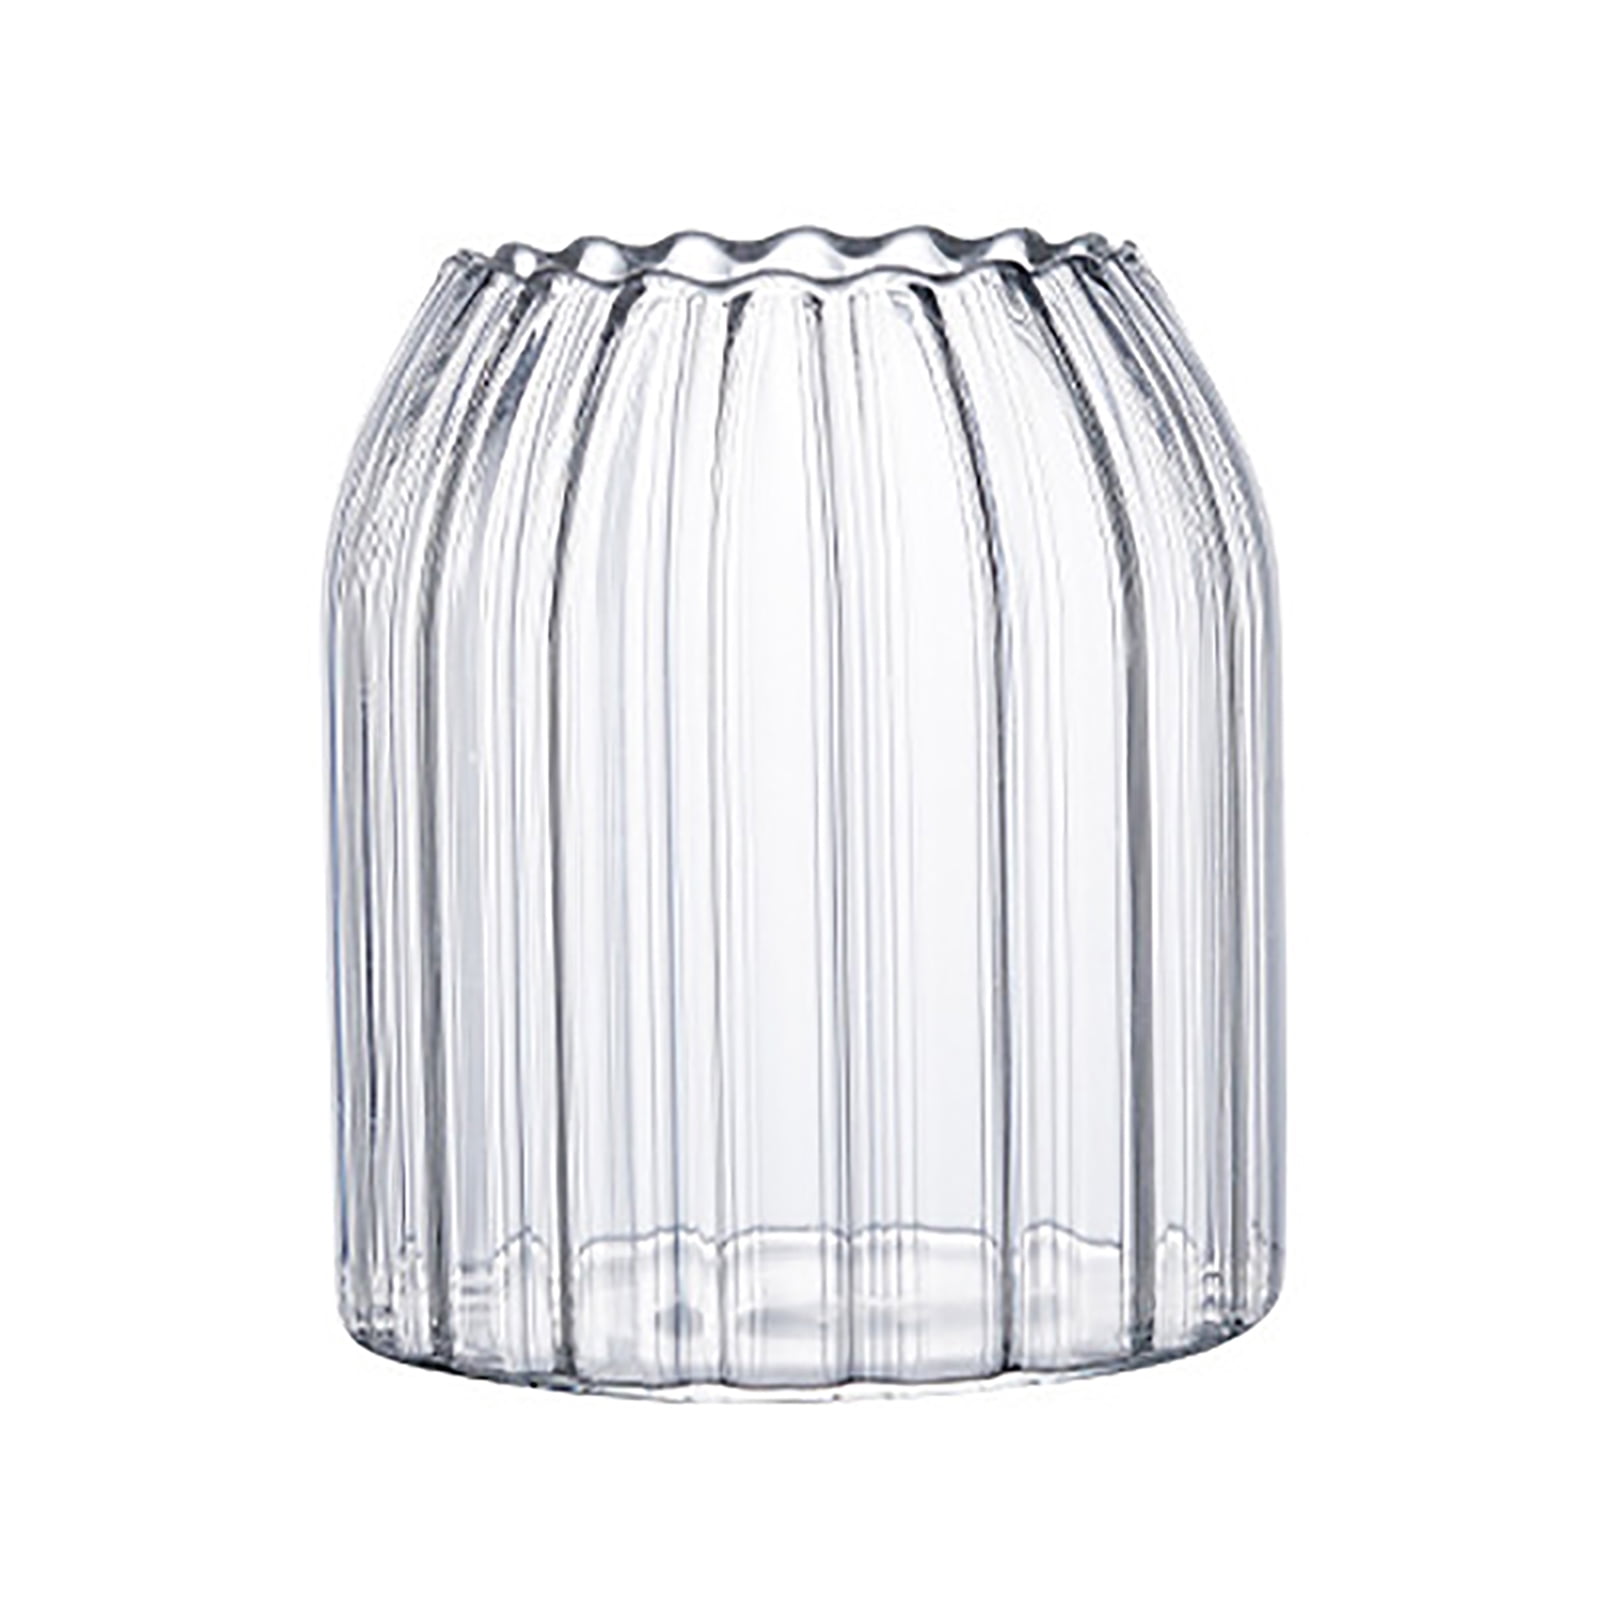 Peyan Ribbed Glassware,1 Pcs Ripple Glass Cup,10 oz Belgium